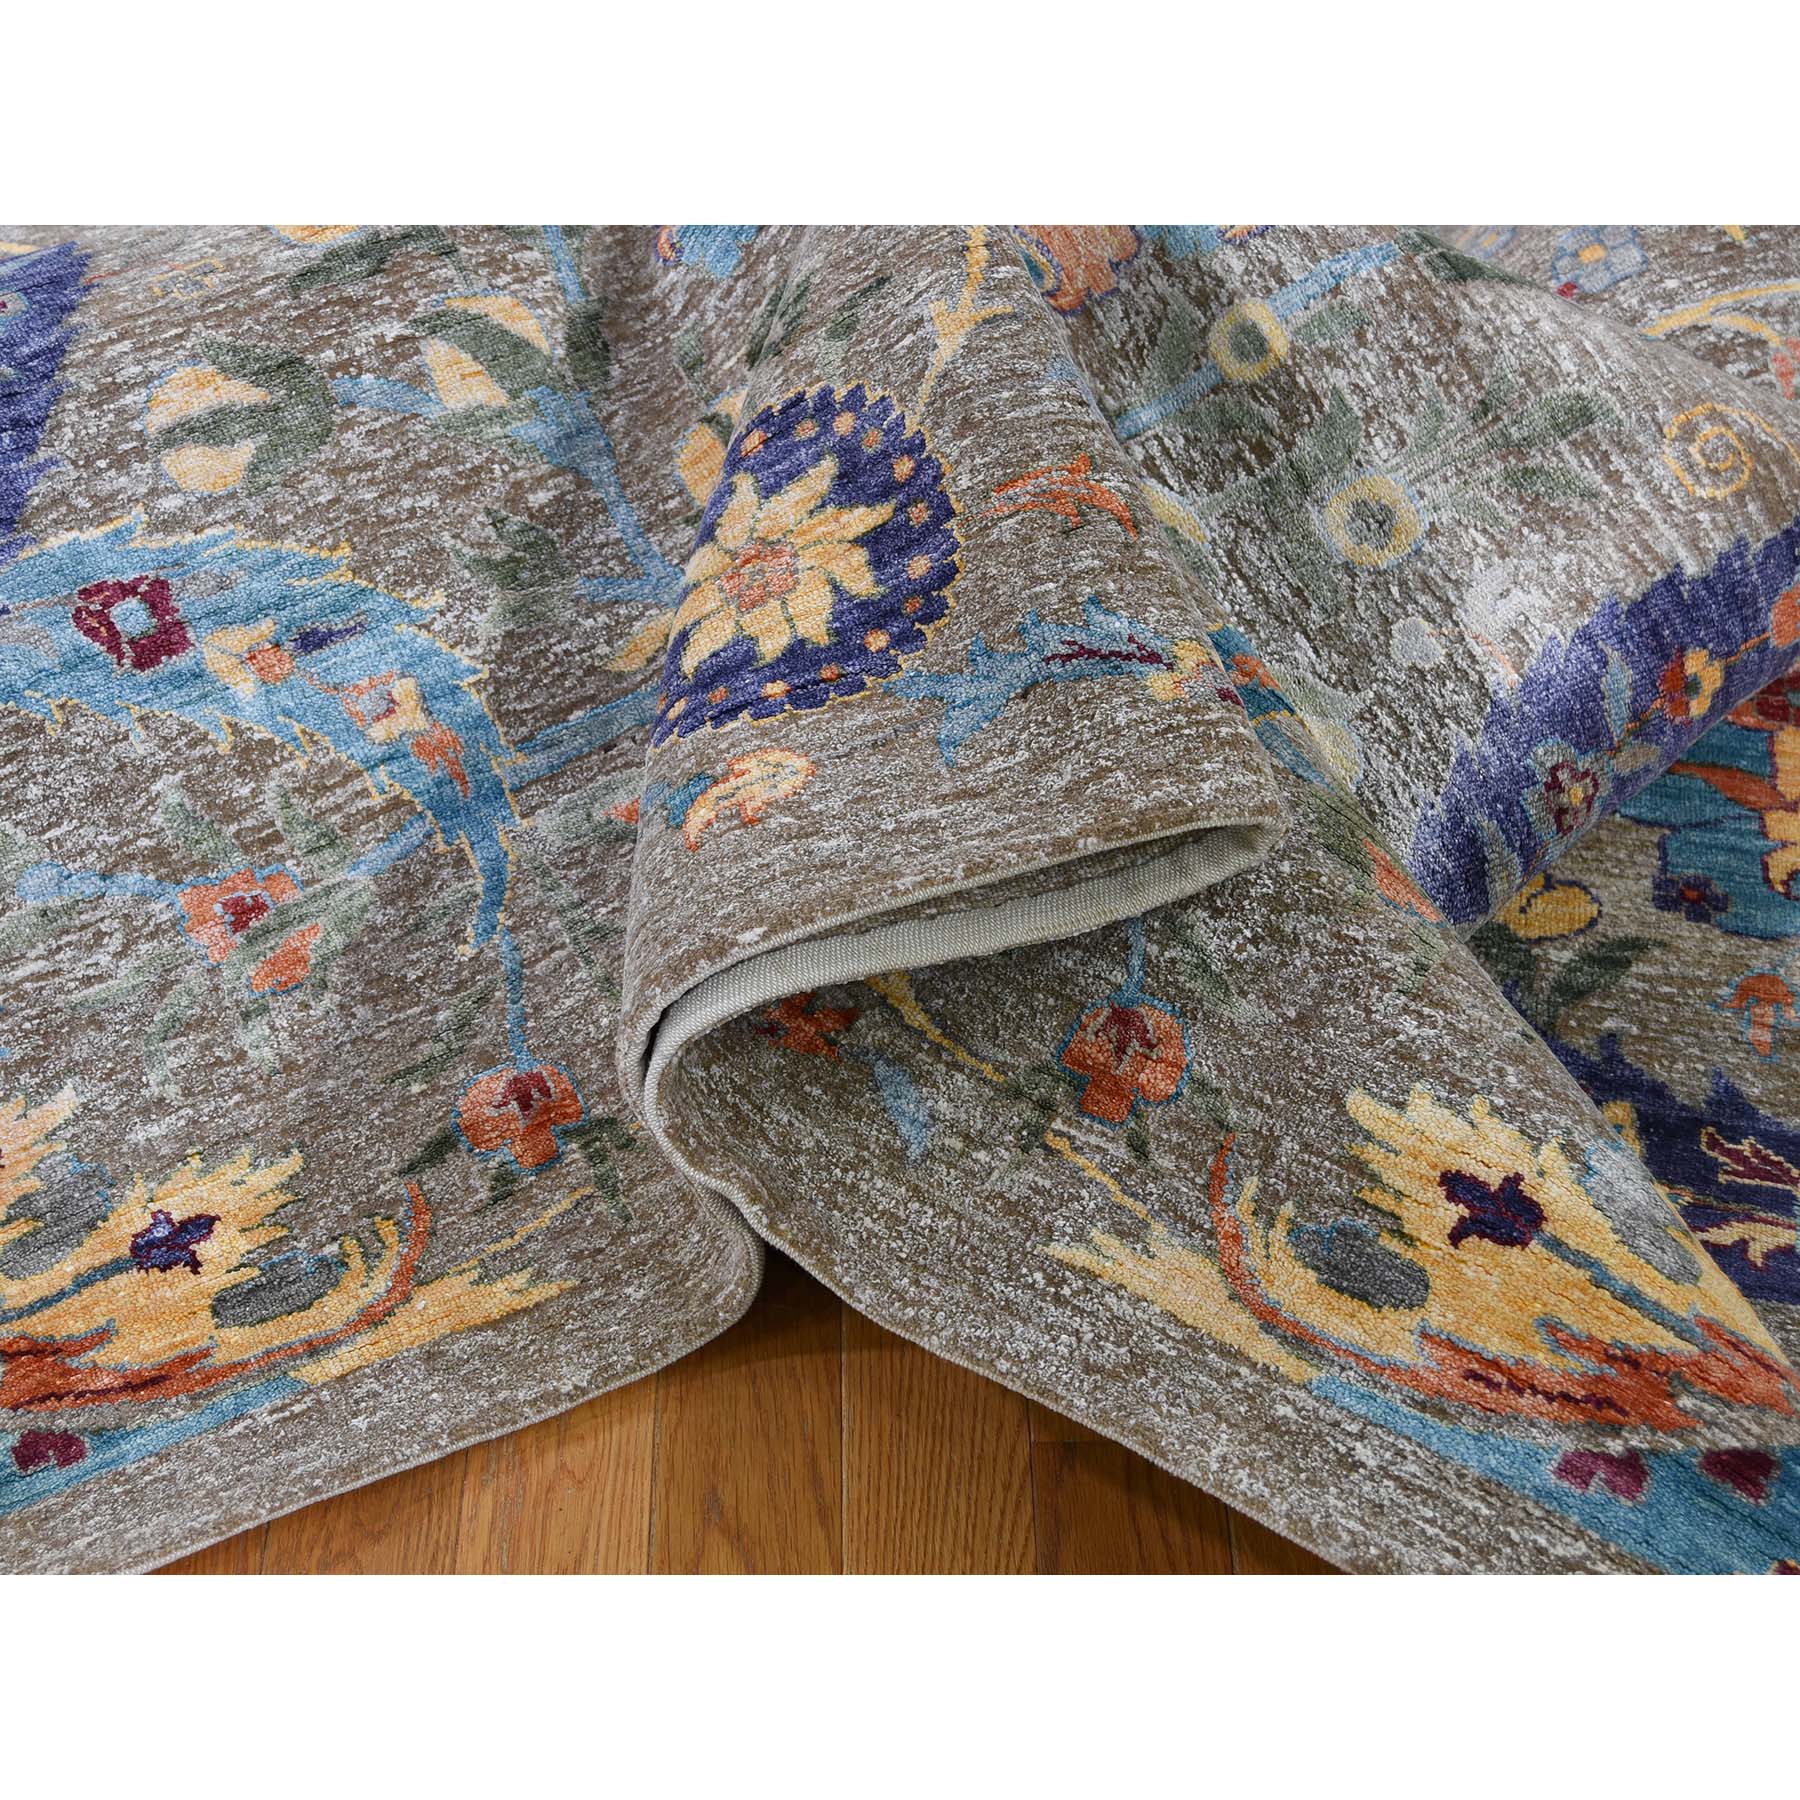 12-1 x15-3  Sickle Leaf Design Textured Silk With Textured Wool Hand-Knotted Oversize Oriental Rug 